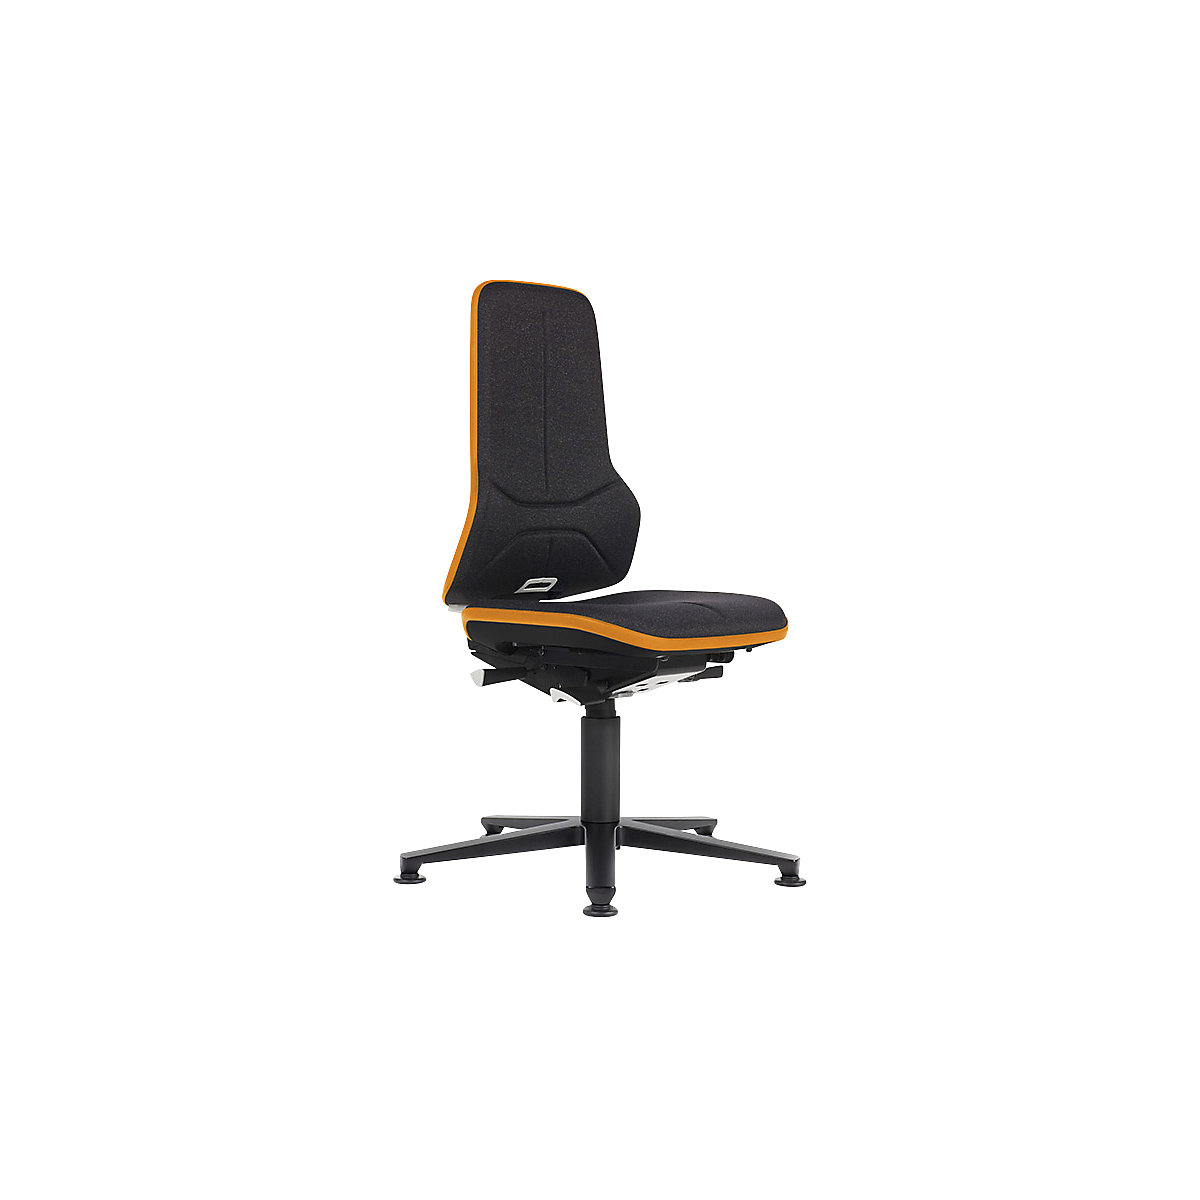 Radna okretna stolica NEON ESD, kliznik – bimos, sinkroni mehanizam, tkanina, fleksibilna traka u narančastoj boji-9